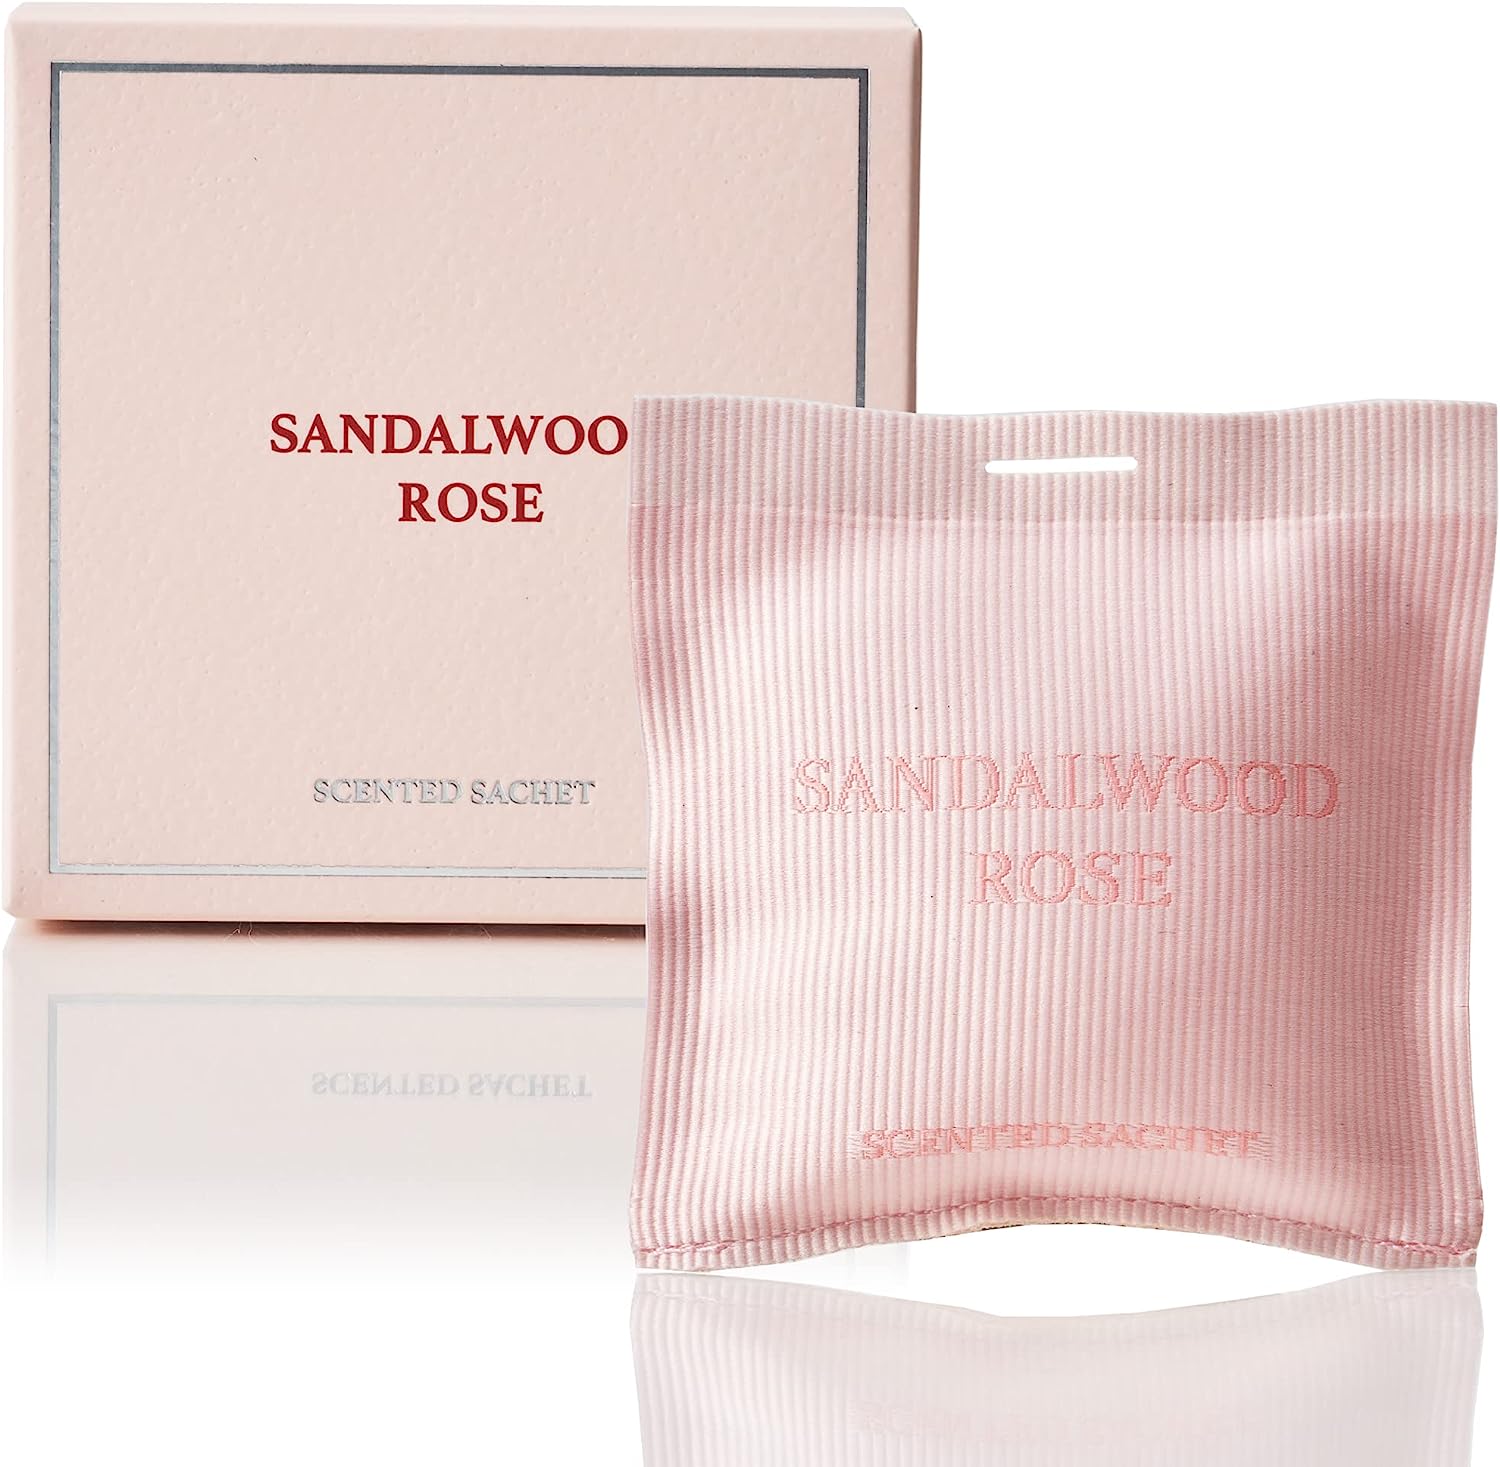 Sandalwood Rose Scented Sachet Bags